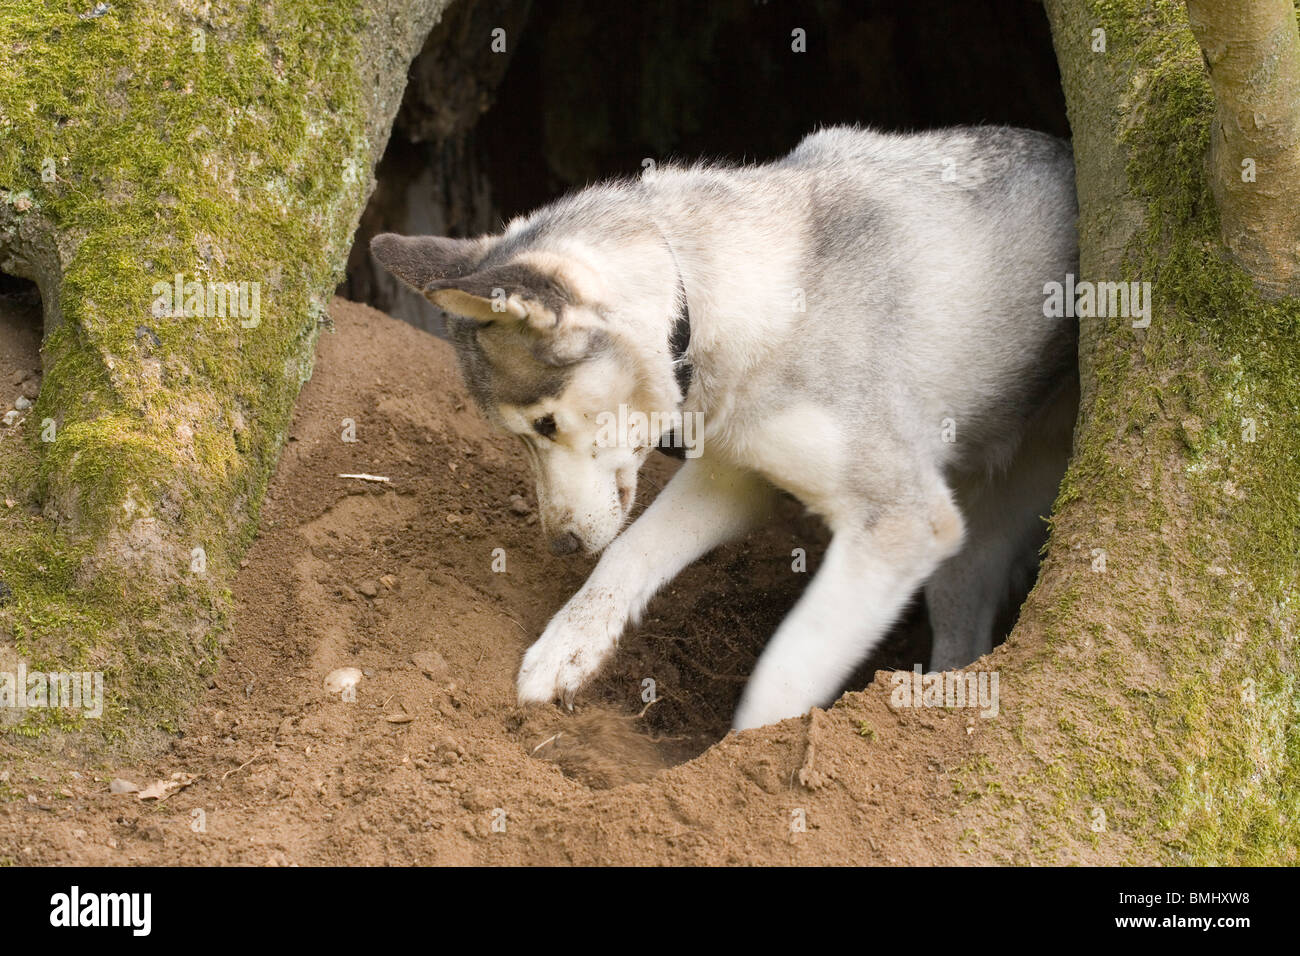 are siberian huskies endangered